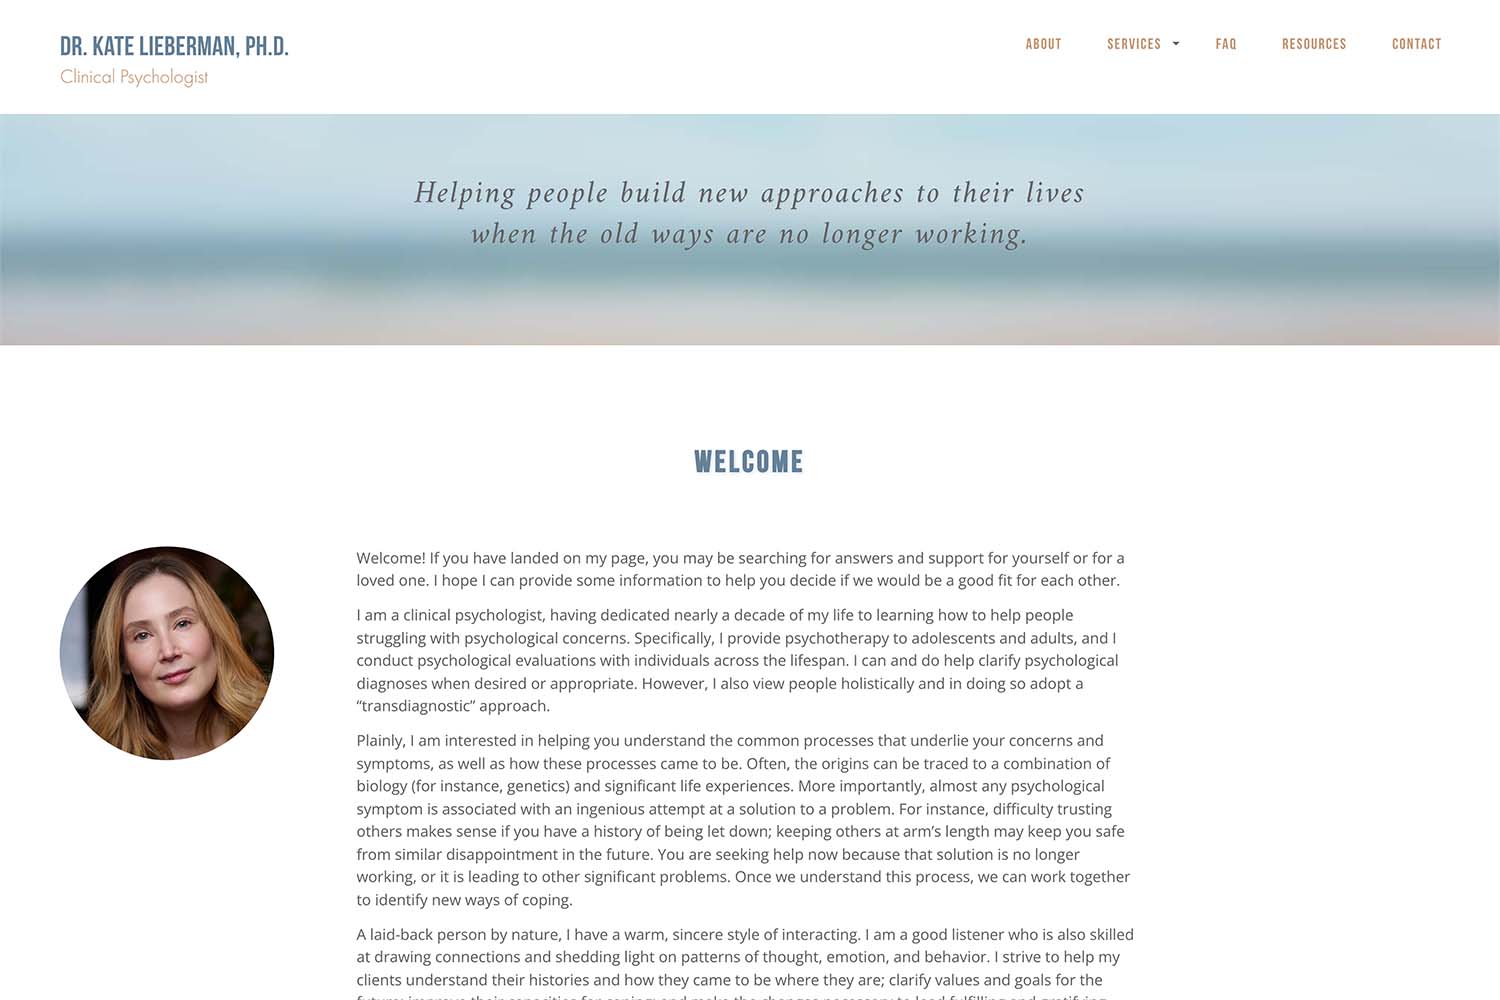 Custom website design for a therapist - Kate Lieberman.